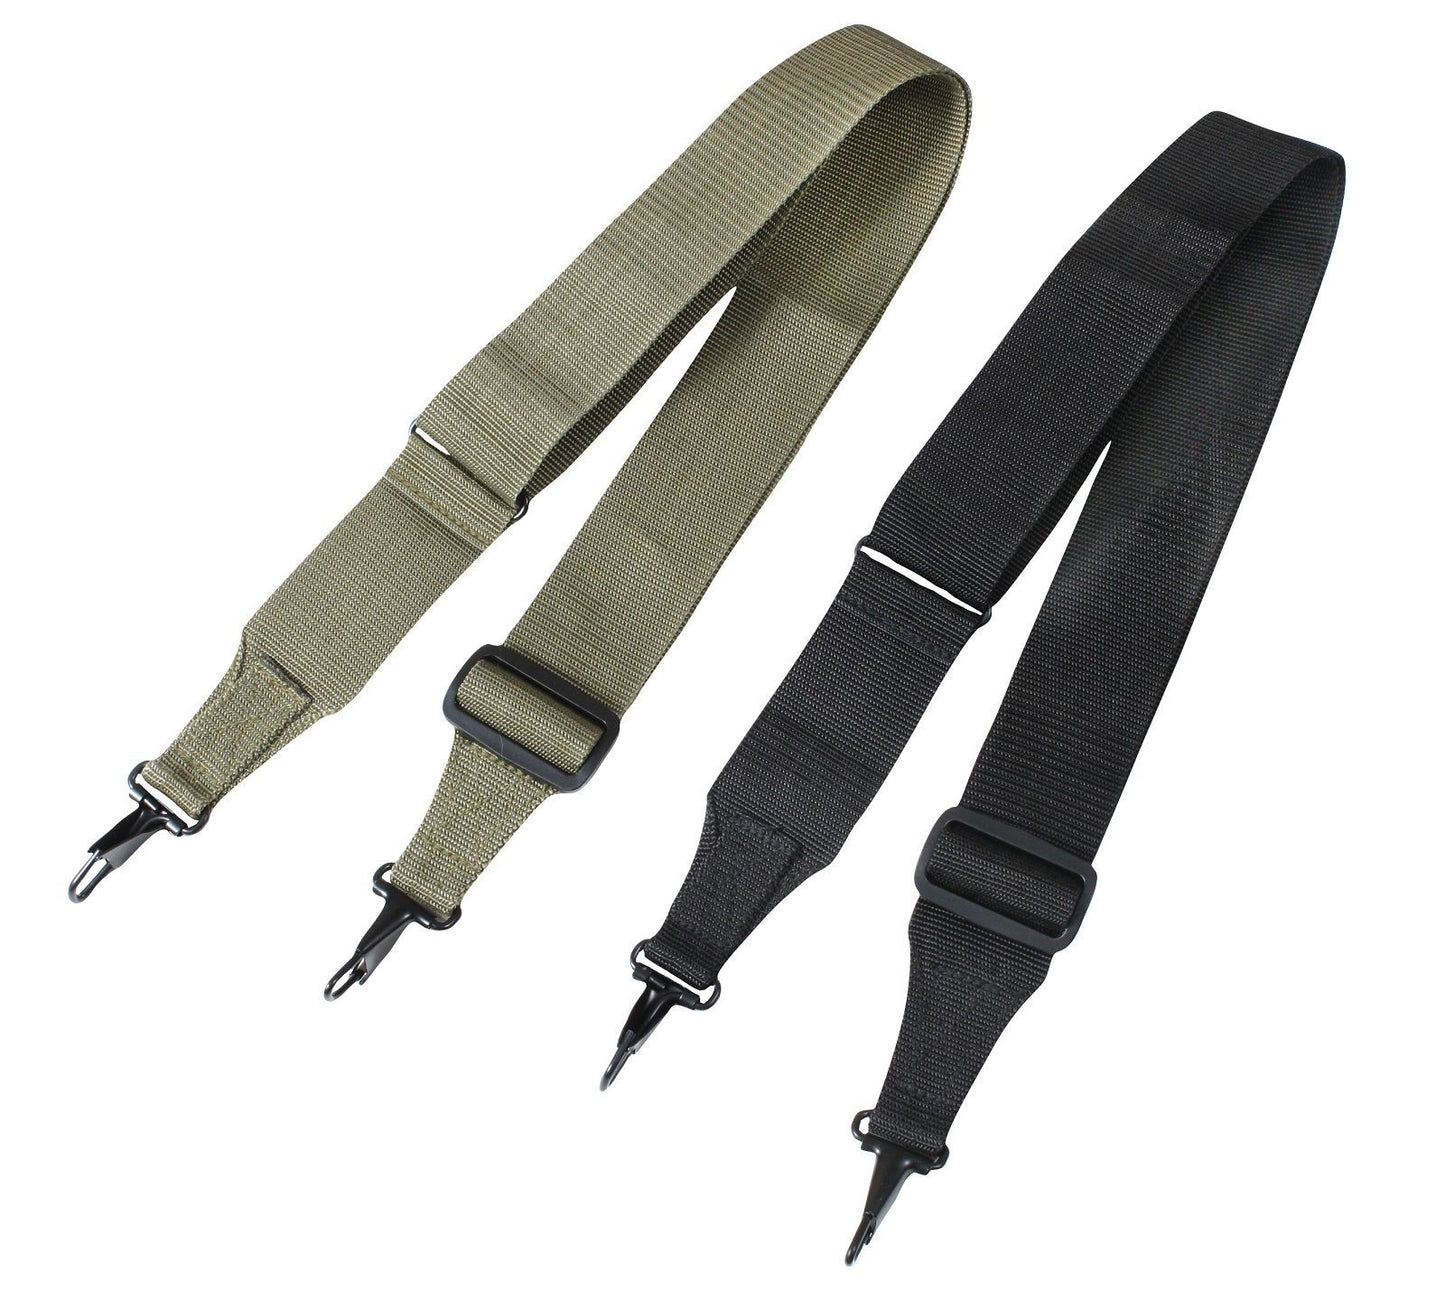 Tactical Utility Straps - General Purpose,Duffle Bag, Sports Bag Strap-Black, OD